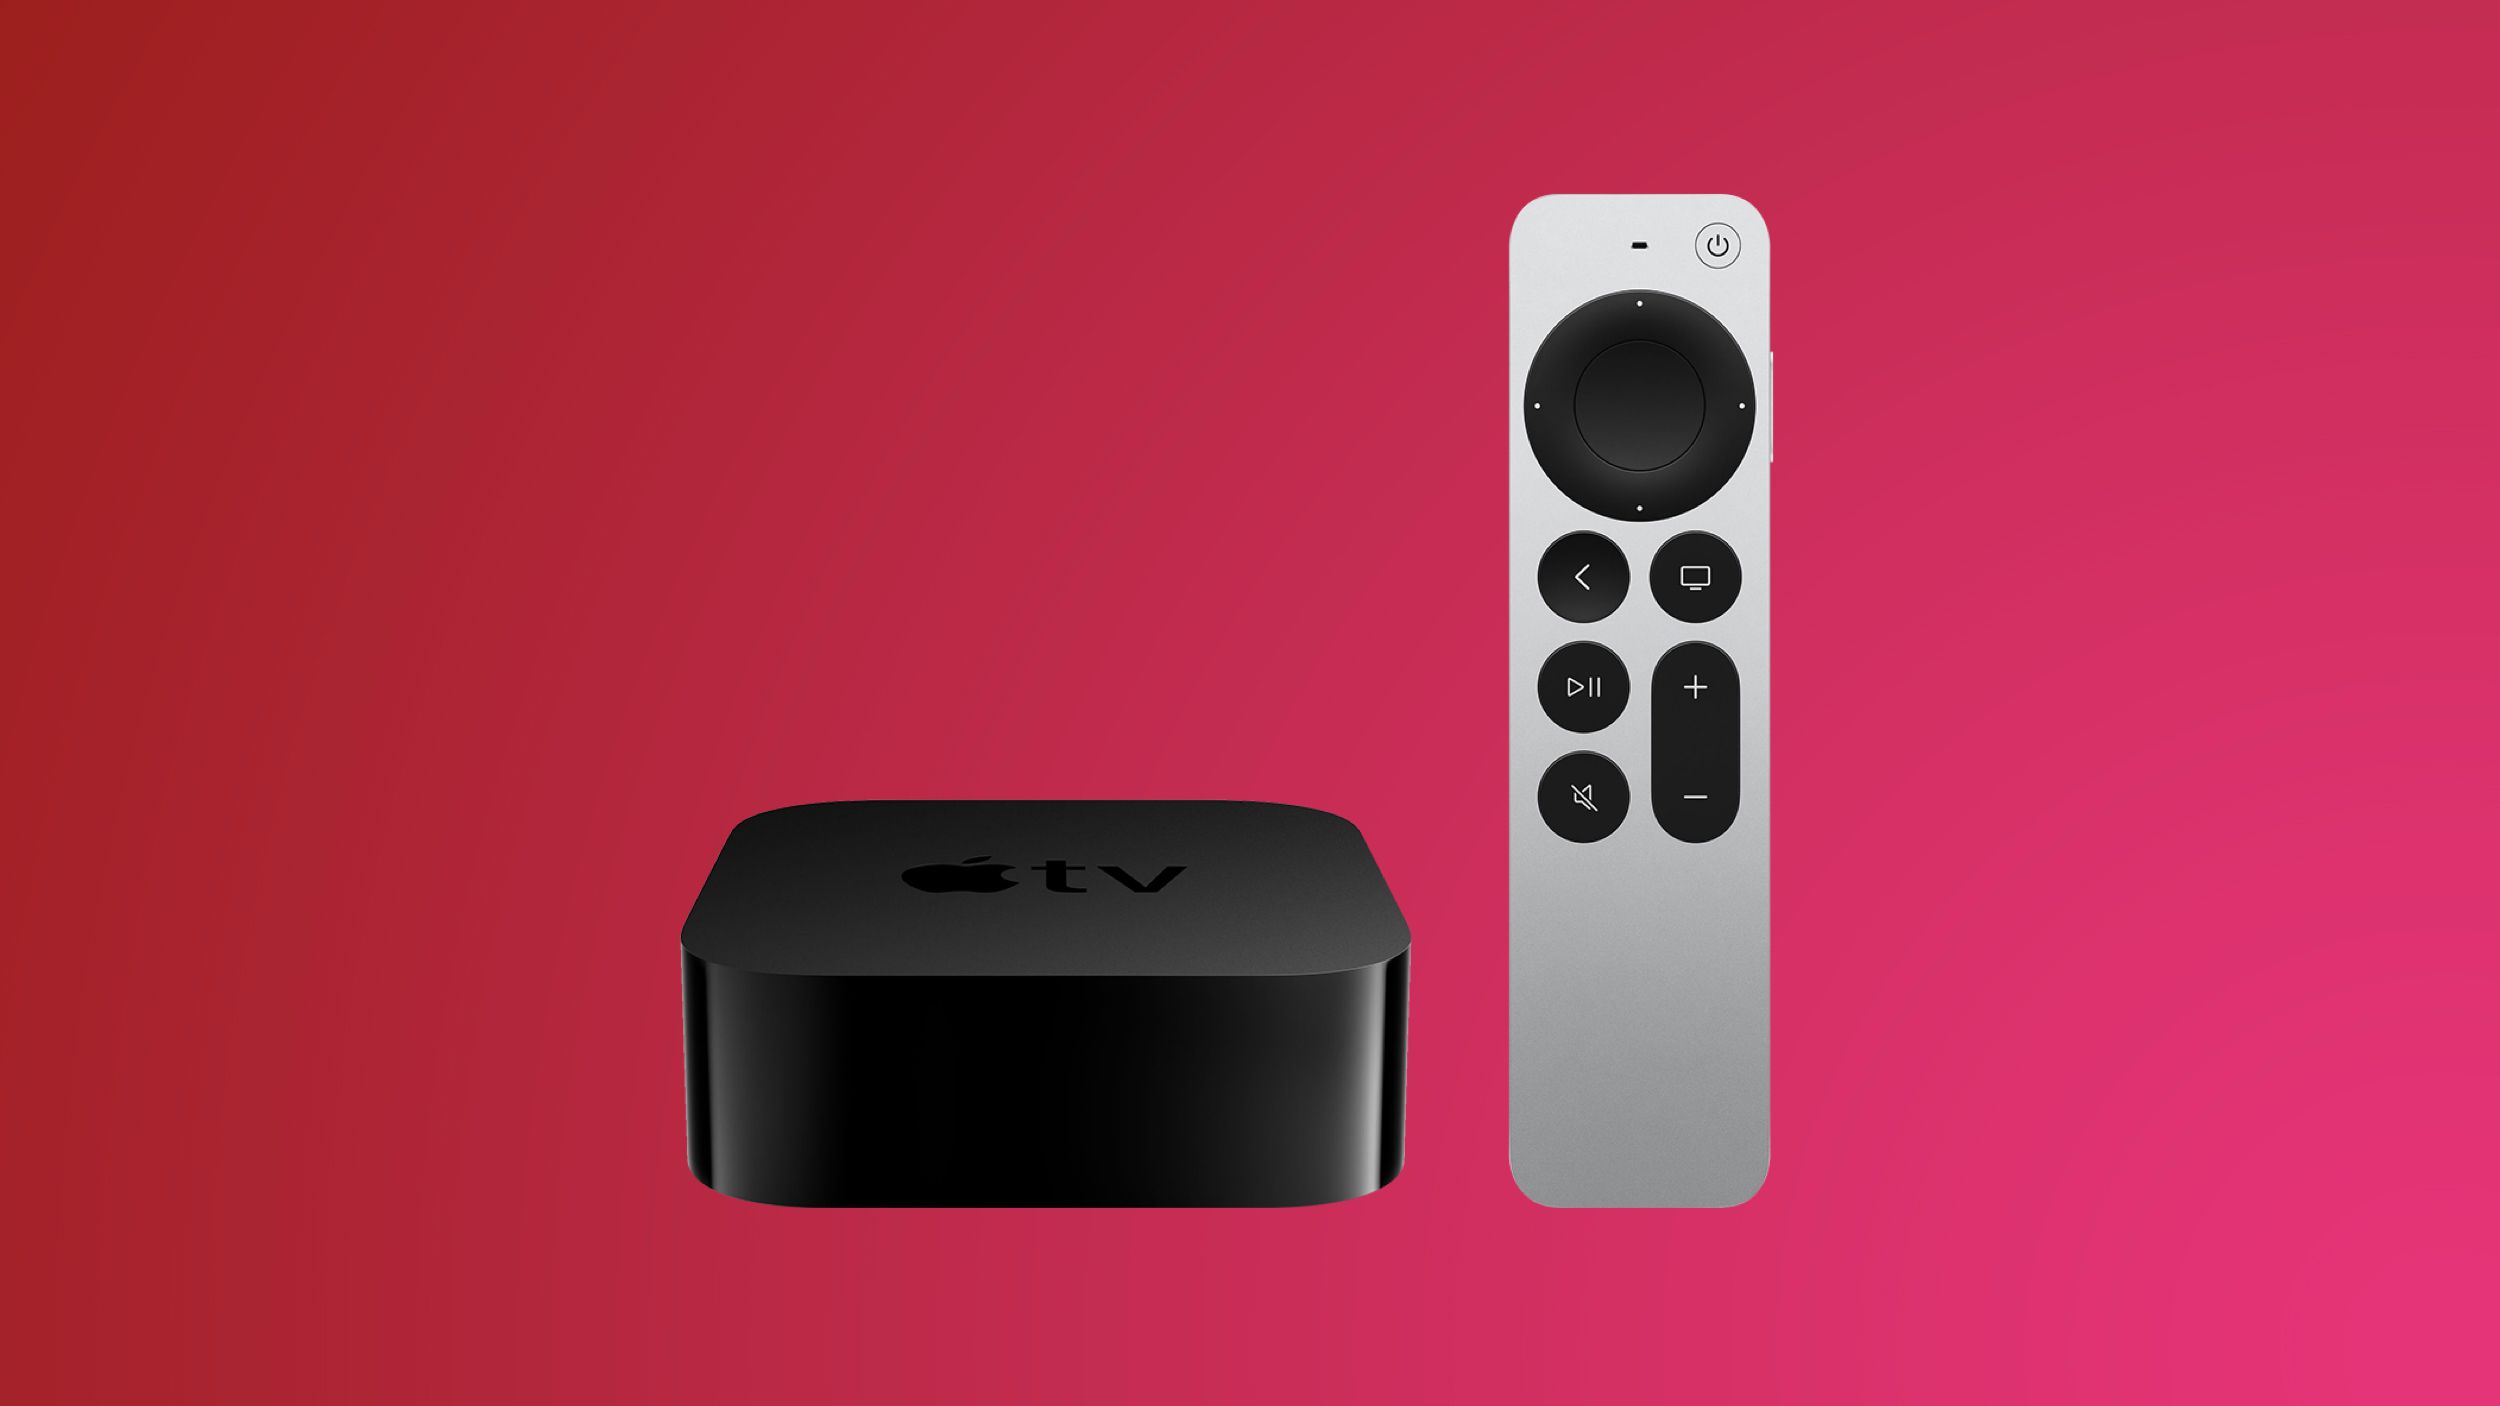 Apple agora oferece vale-presente de US$ 50 aos clientes dos EUA a cada compra de Apple TV